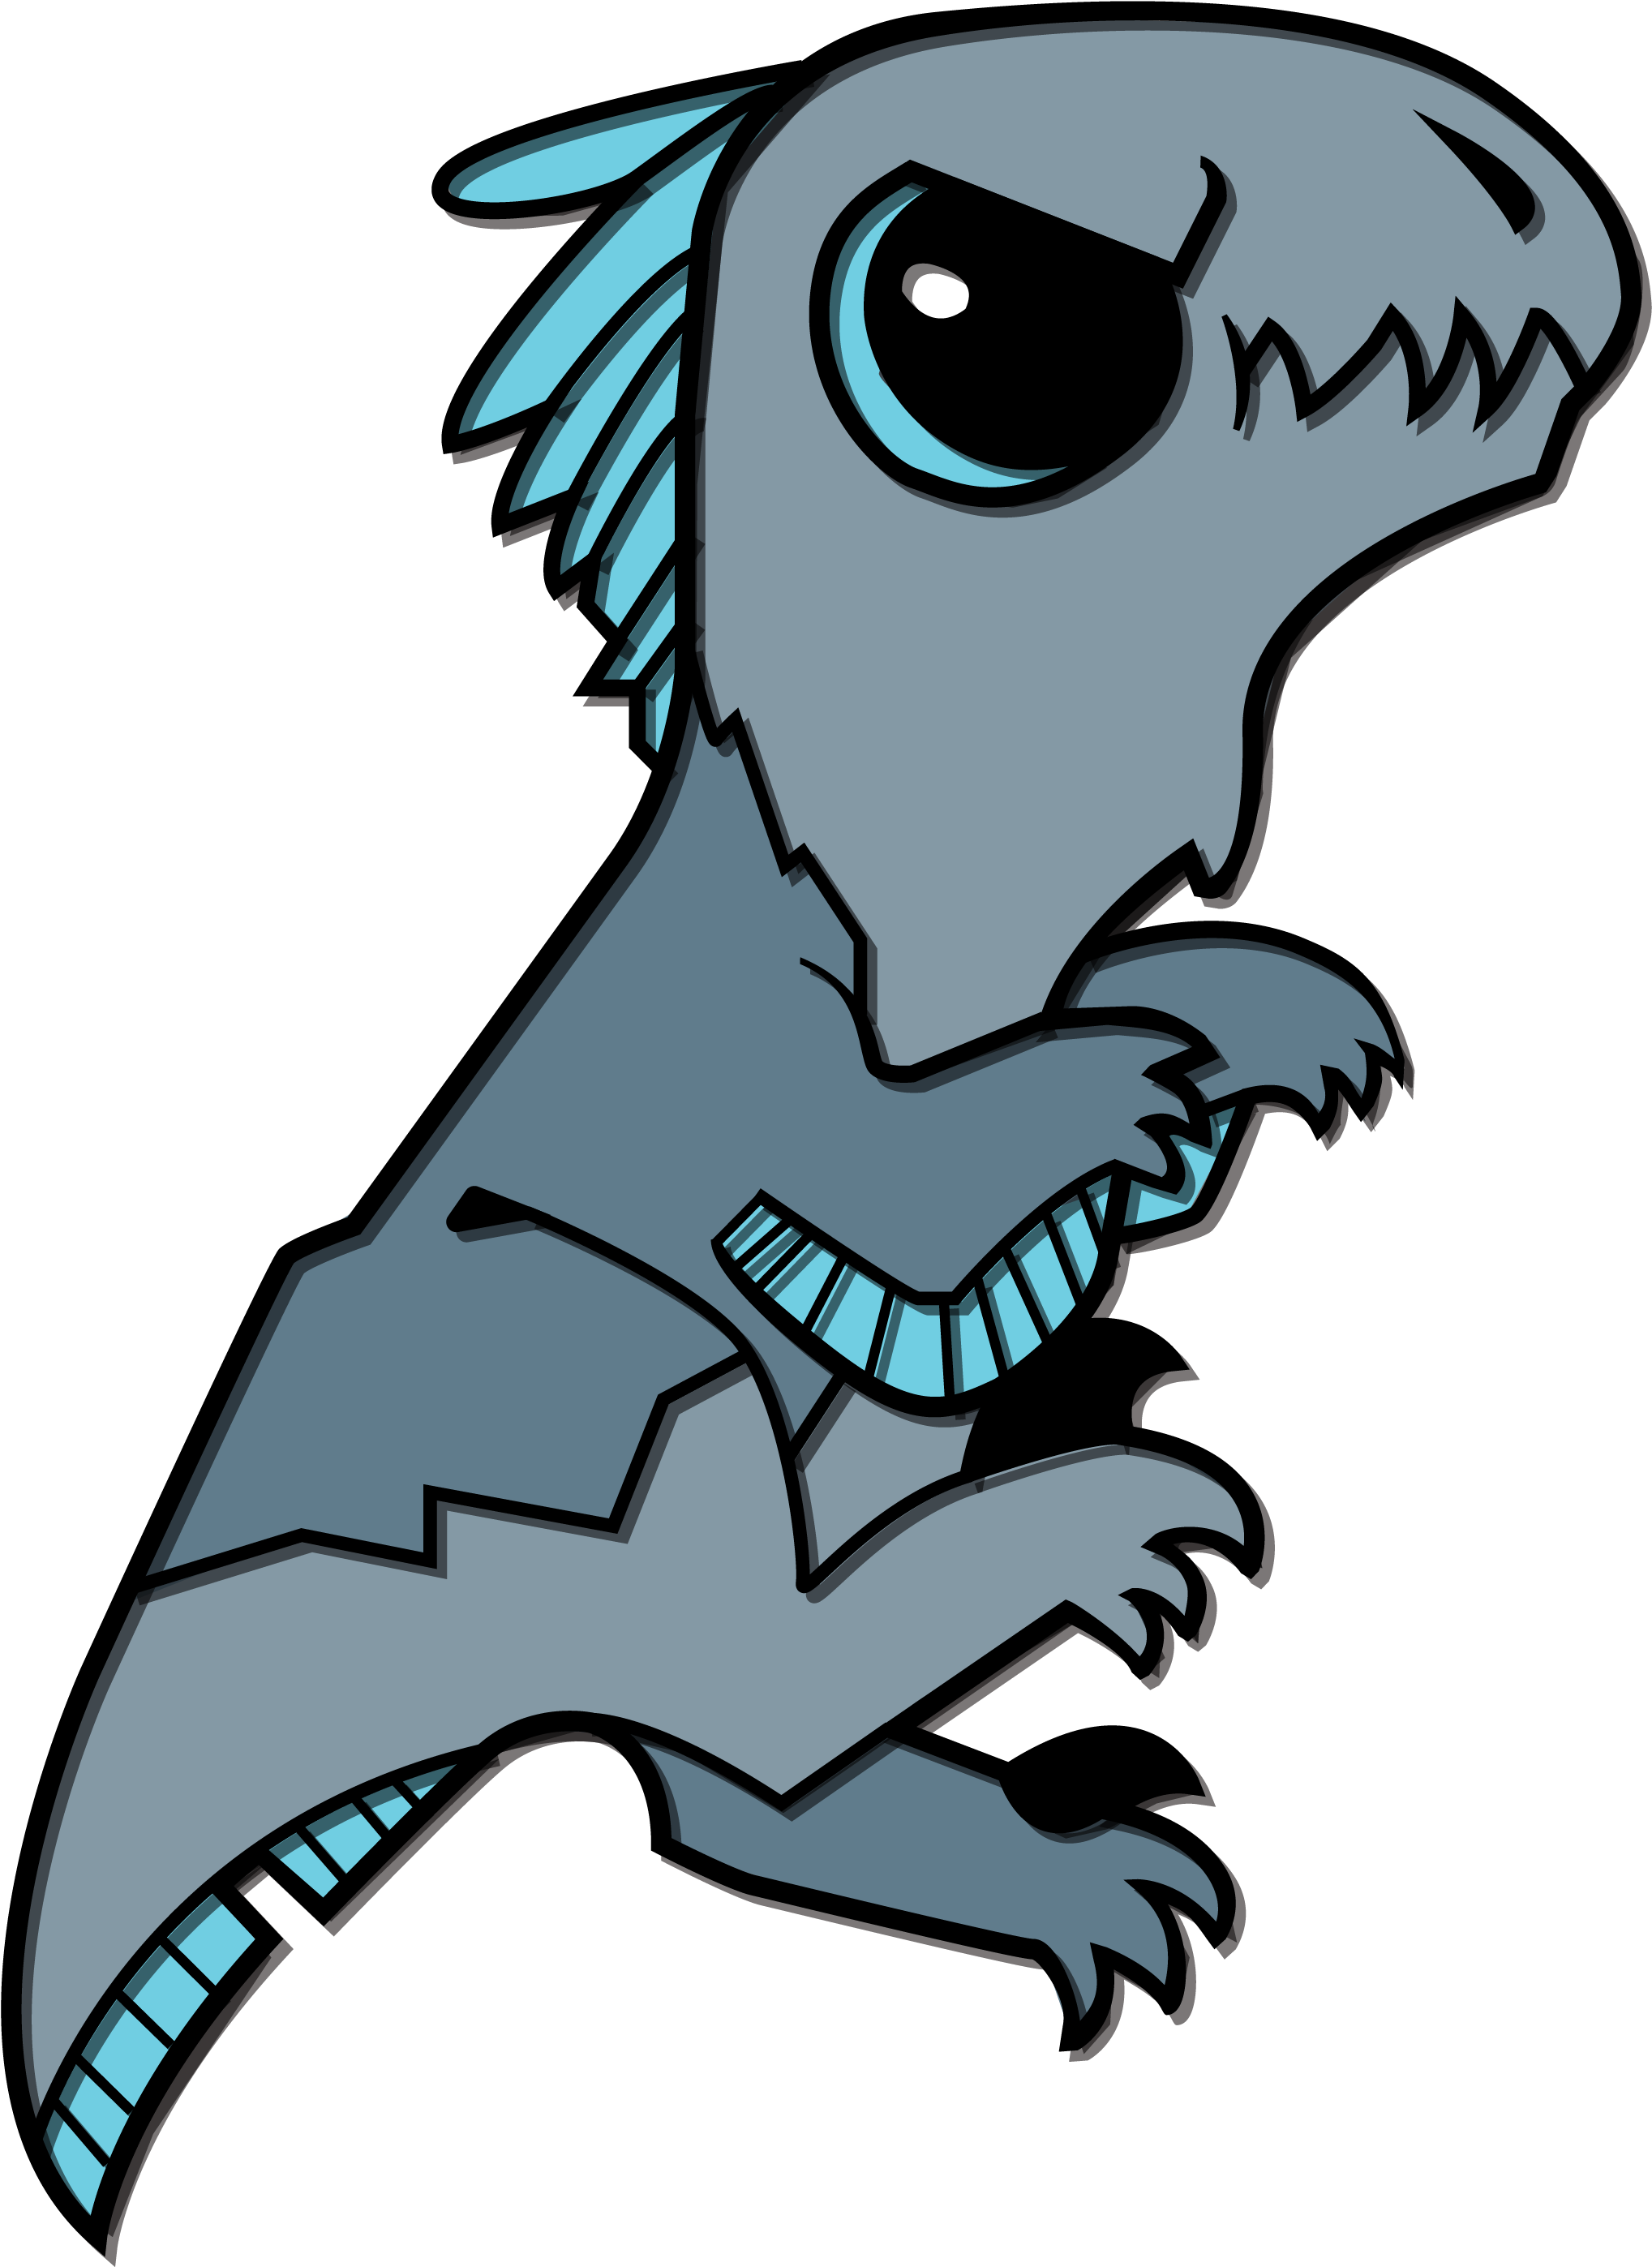 [dino Art] I Drew Up Some Cute Dinosaur Pin Designs - Cute Transparent Dinosaur (2230x2794)